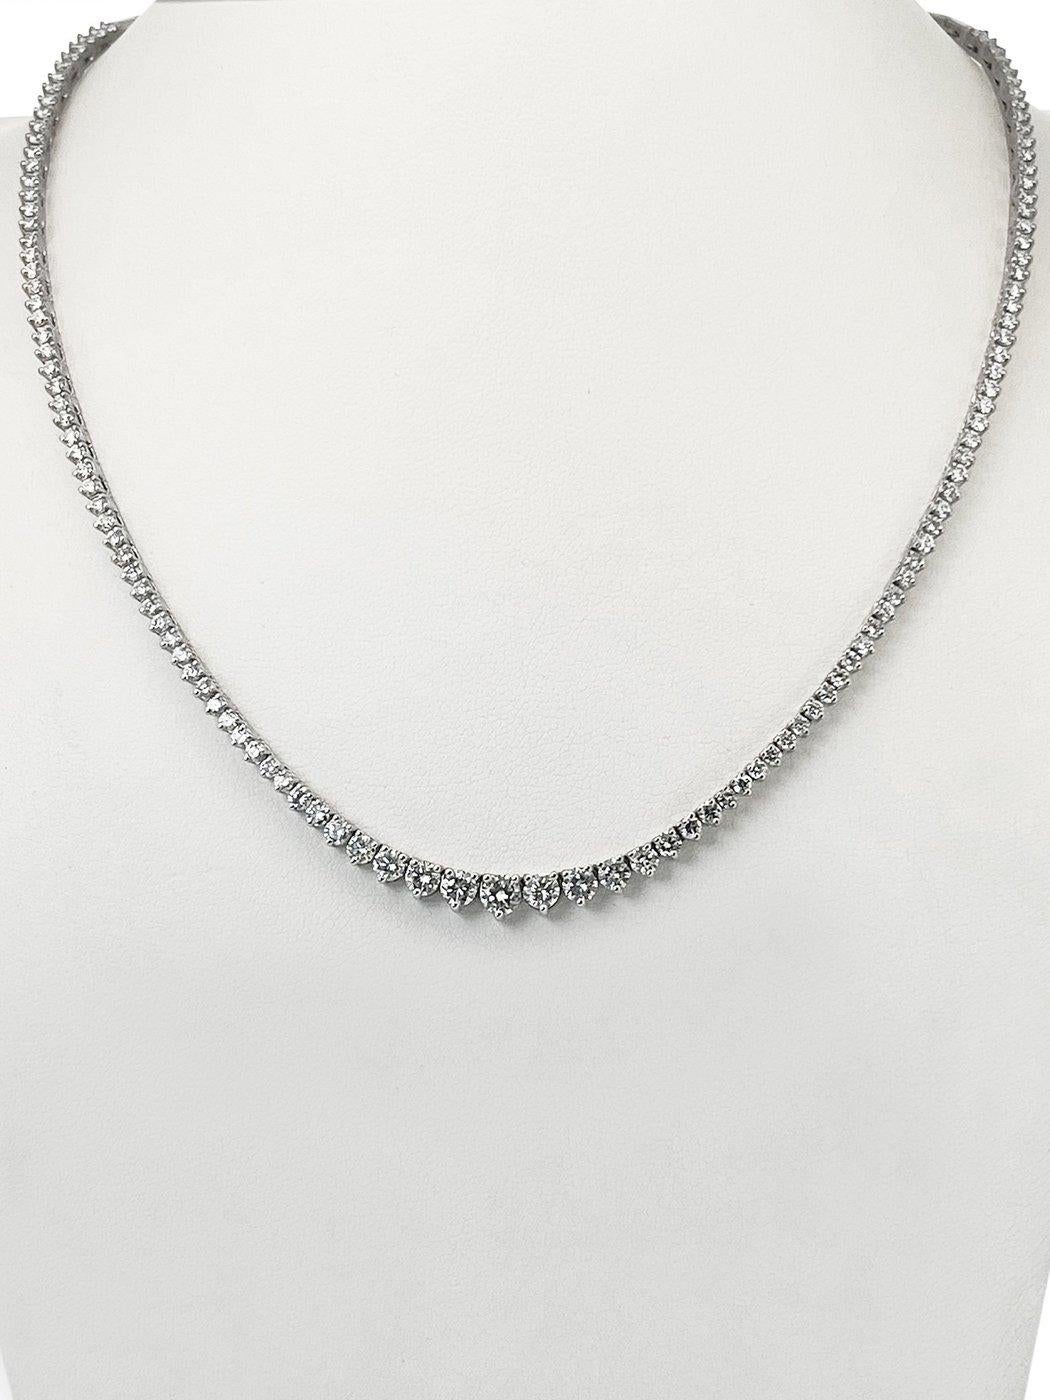 Stunning 14k White Gold Riviera Necklace w/ 6ct Natural Diamonds IGI Certificate 3